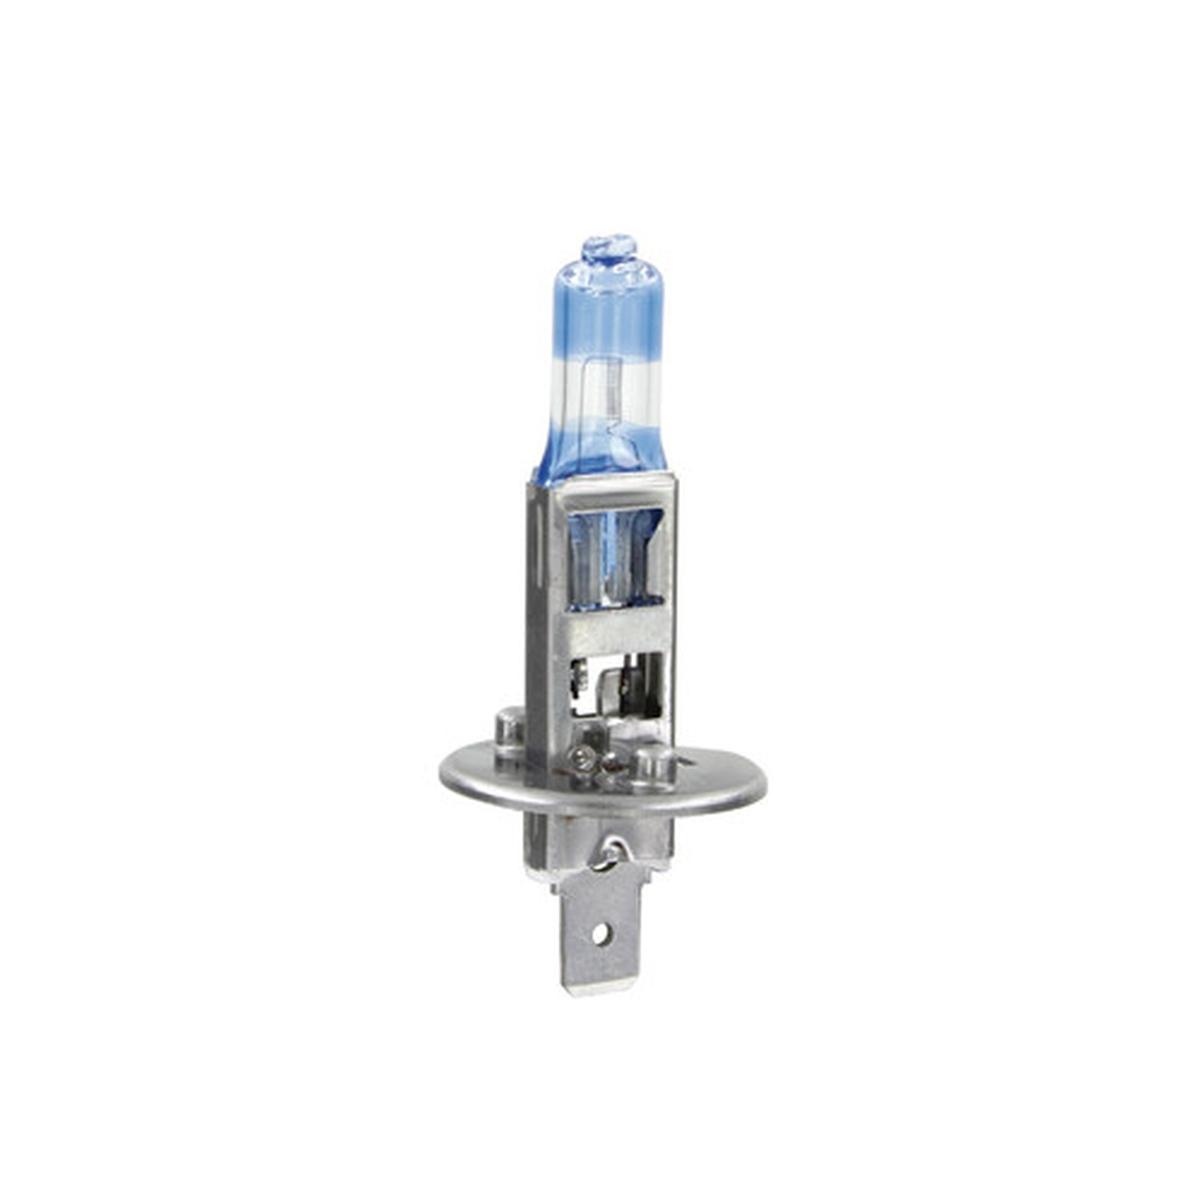 12V Lampada alogena Xenon Top +120% luce - H1 - 55W - P14,5s - 2 pz - Scatola